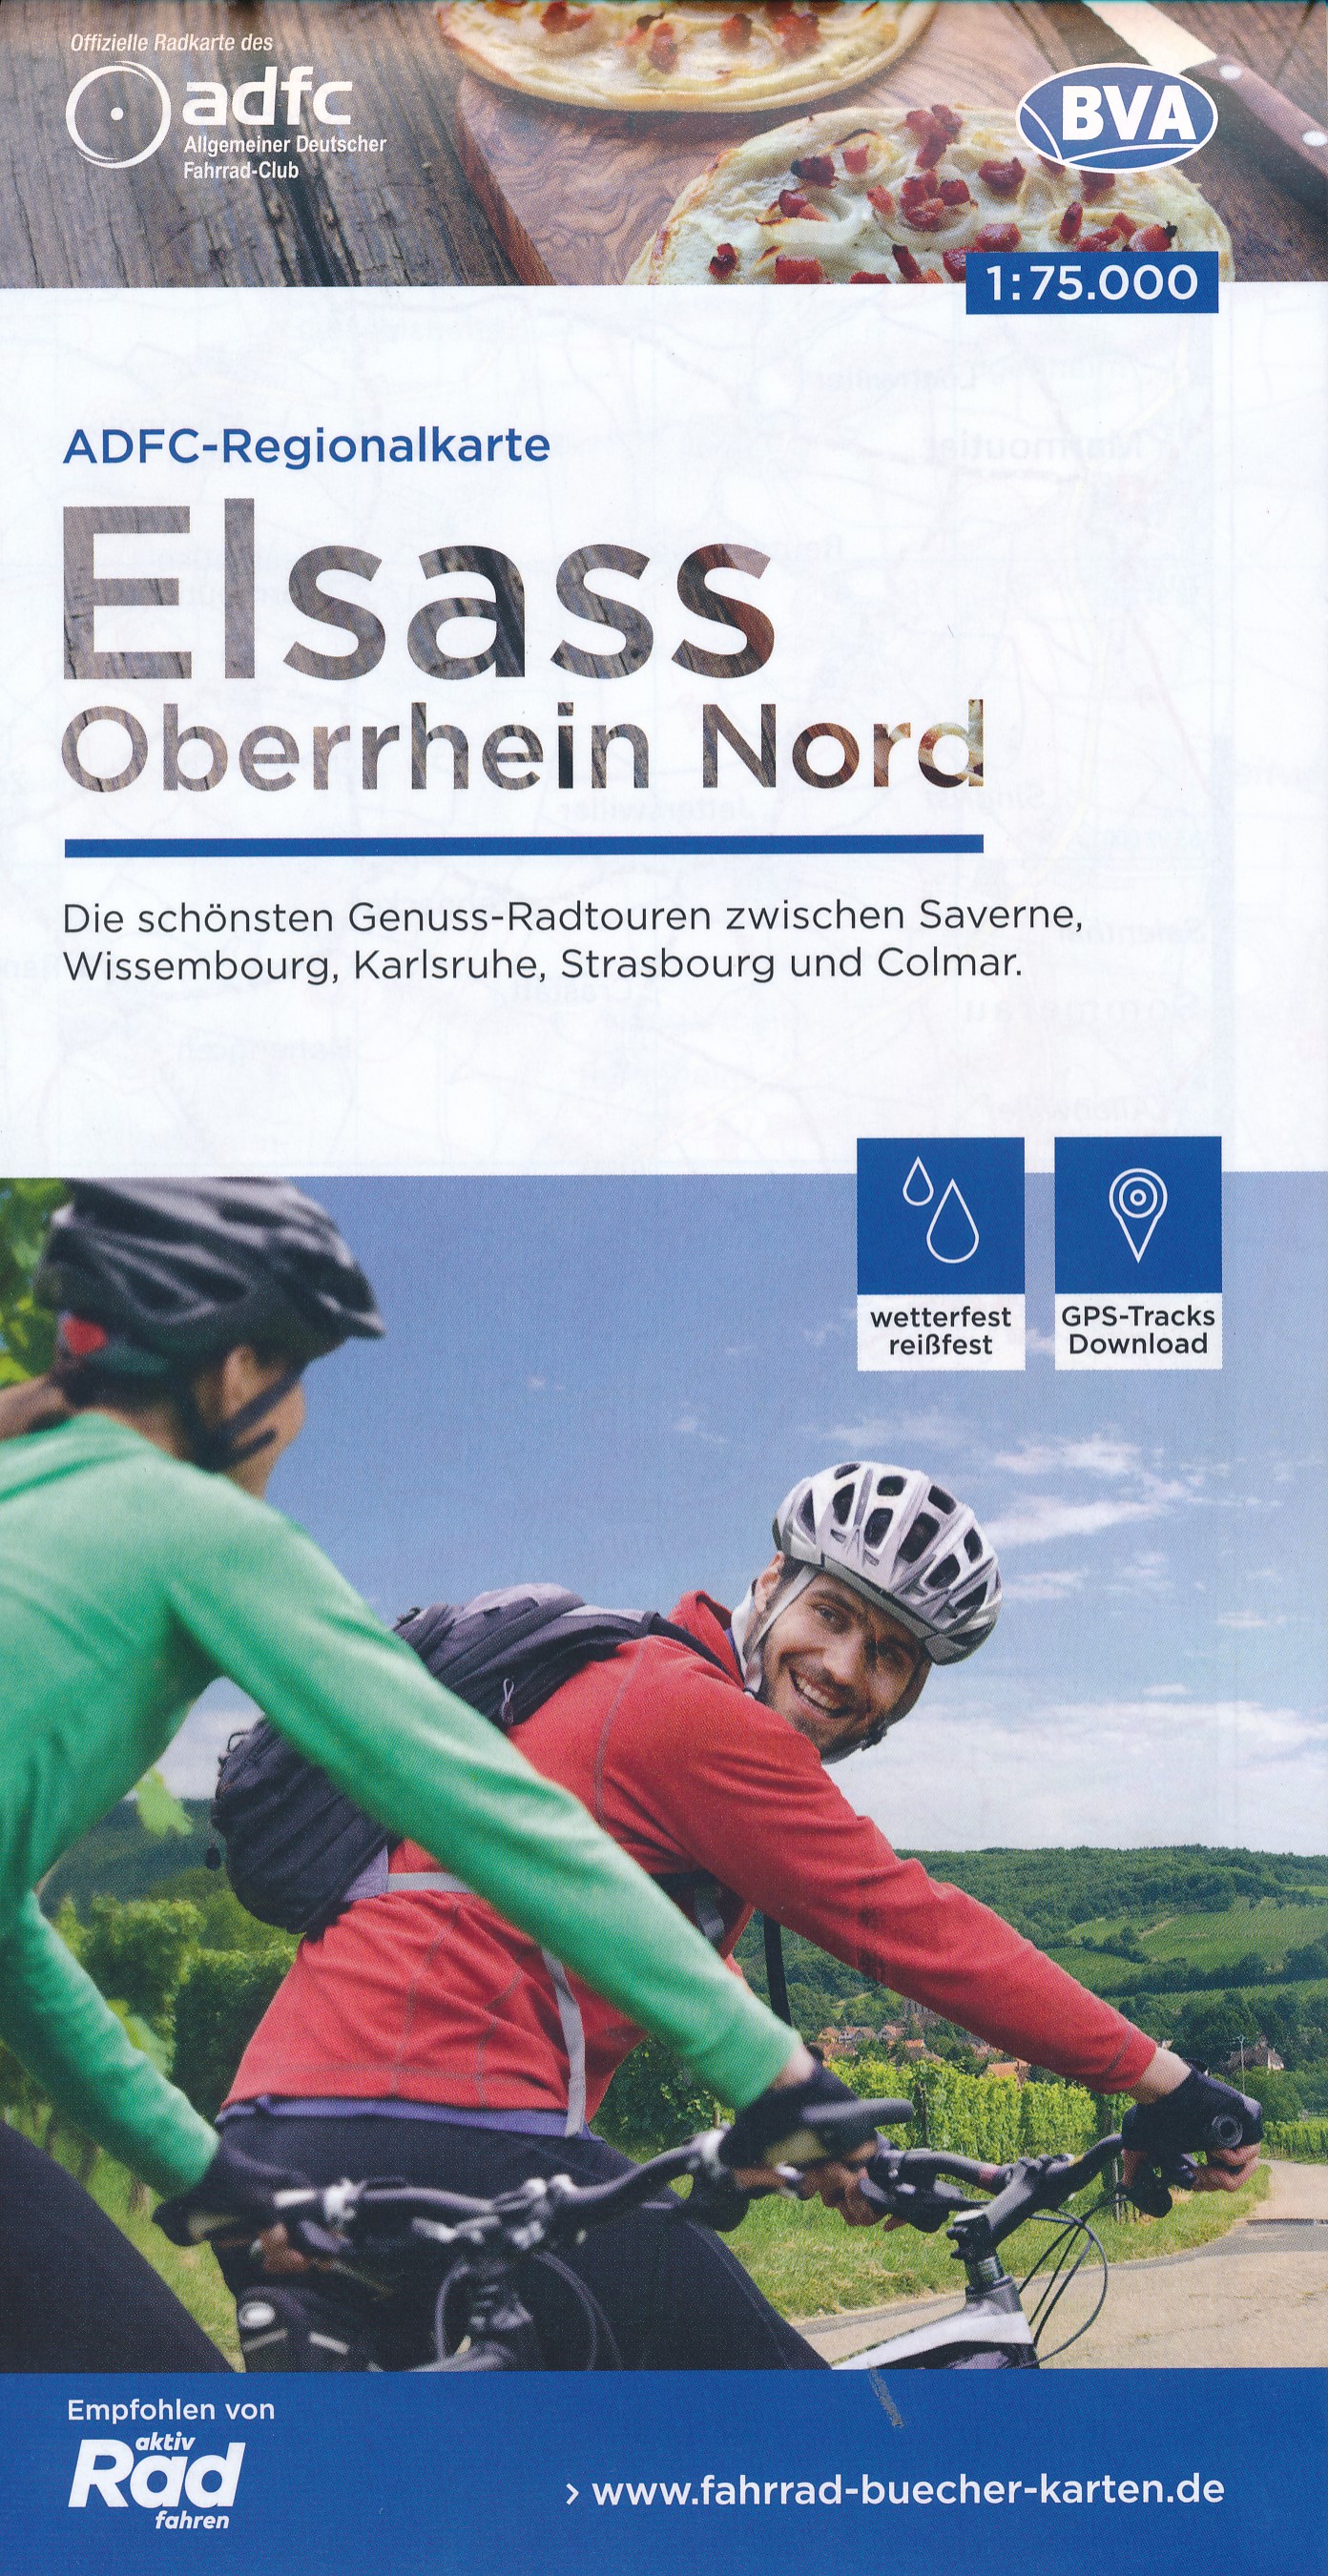 Online bestellen: Fietskaart ADFC Regionalkarte Elsass - Oberrhein Nord - Elzas en Vogezen | BVA BikeMedia